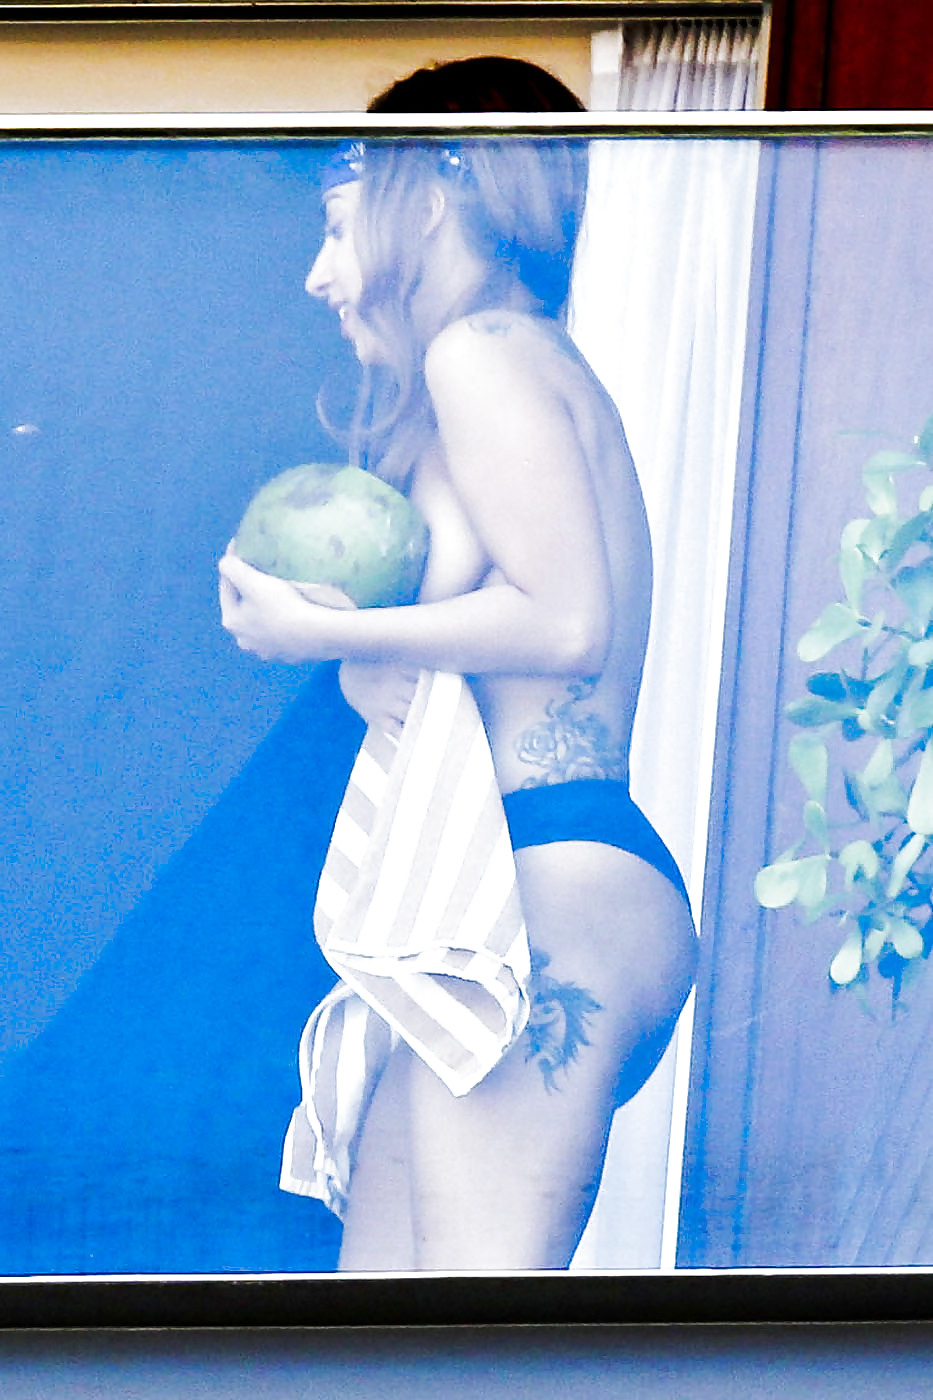 Lady Gaga Goes Nearly Nude on Hotel Balcony #17503959